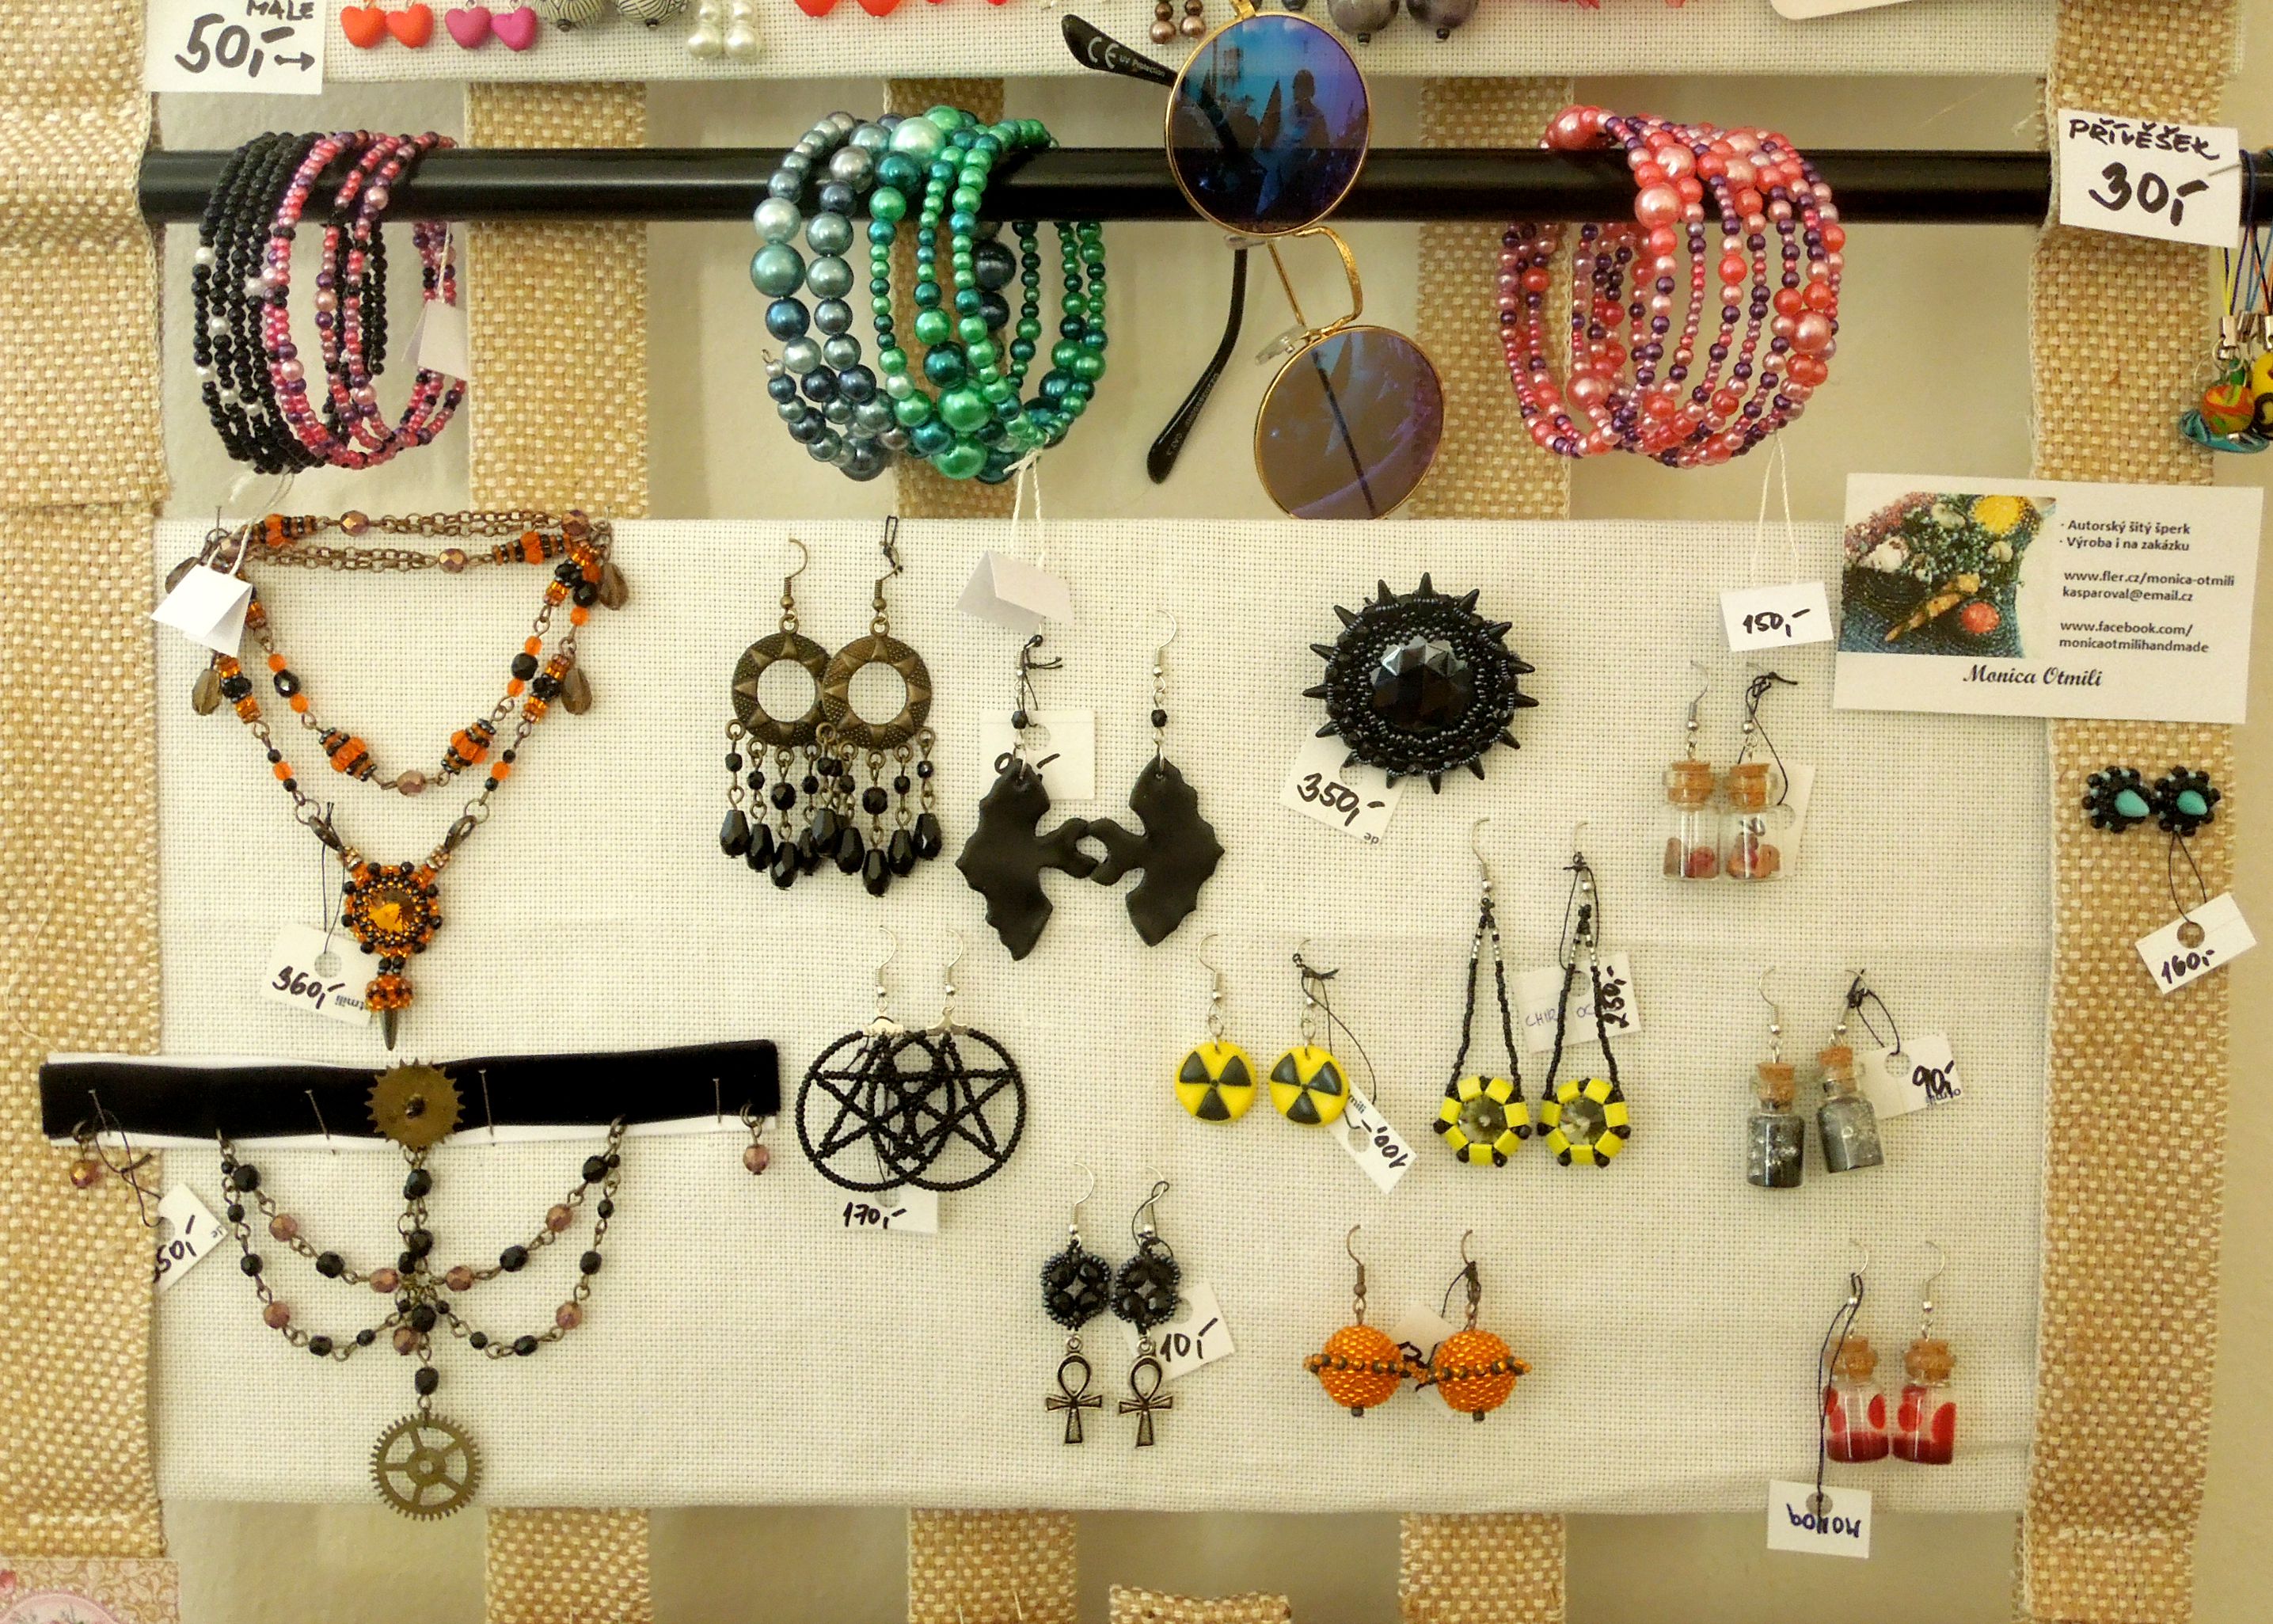 šperky od Monica Otmili